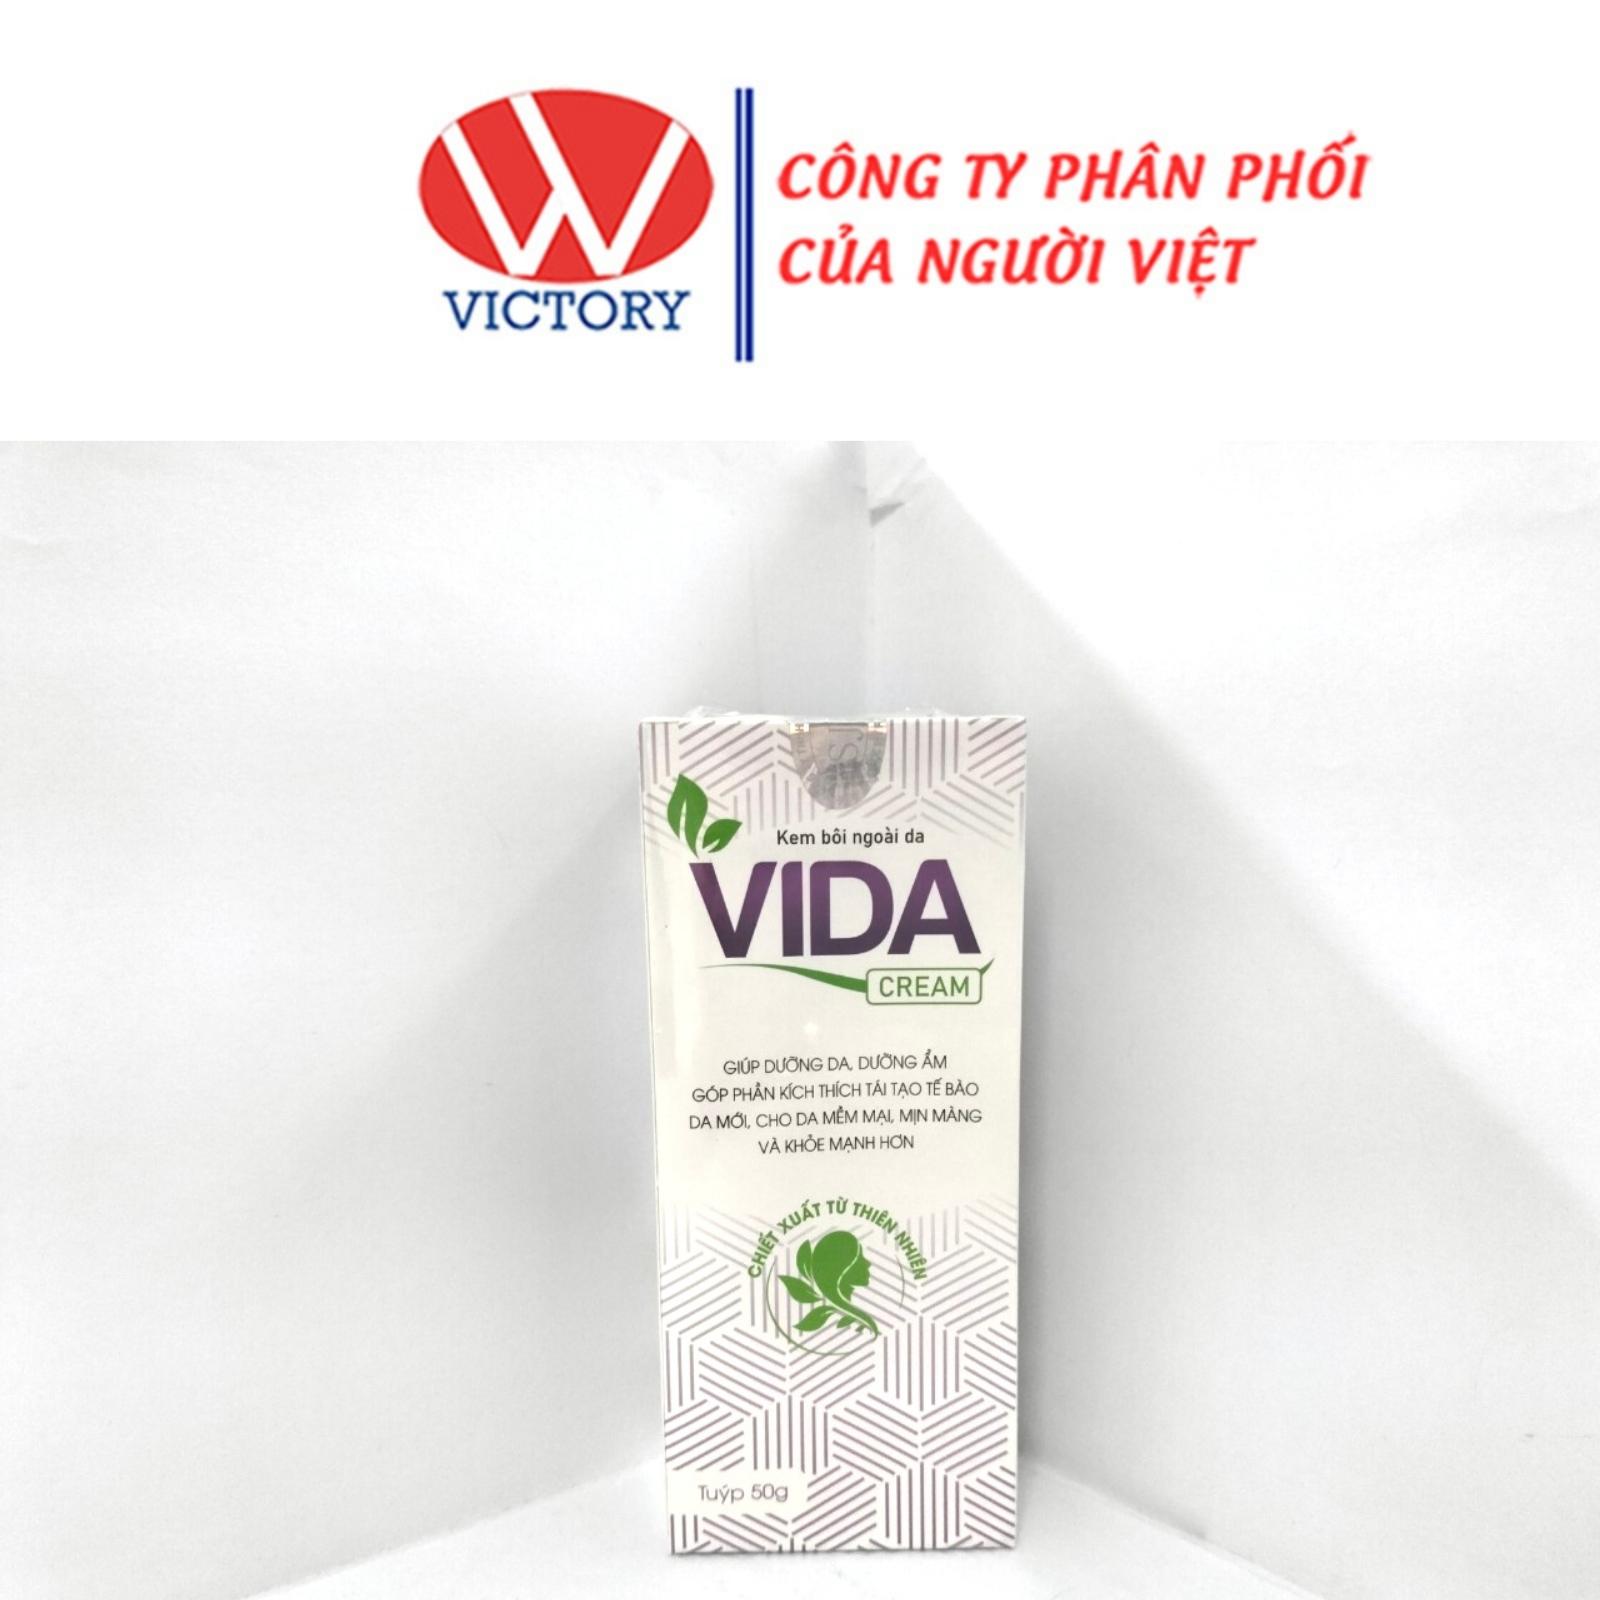 Vida Cream với tinh chất từ rễ cam thảo giúp dịu da, mềm da, giảm mẩn ngứa